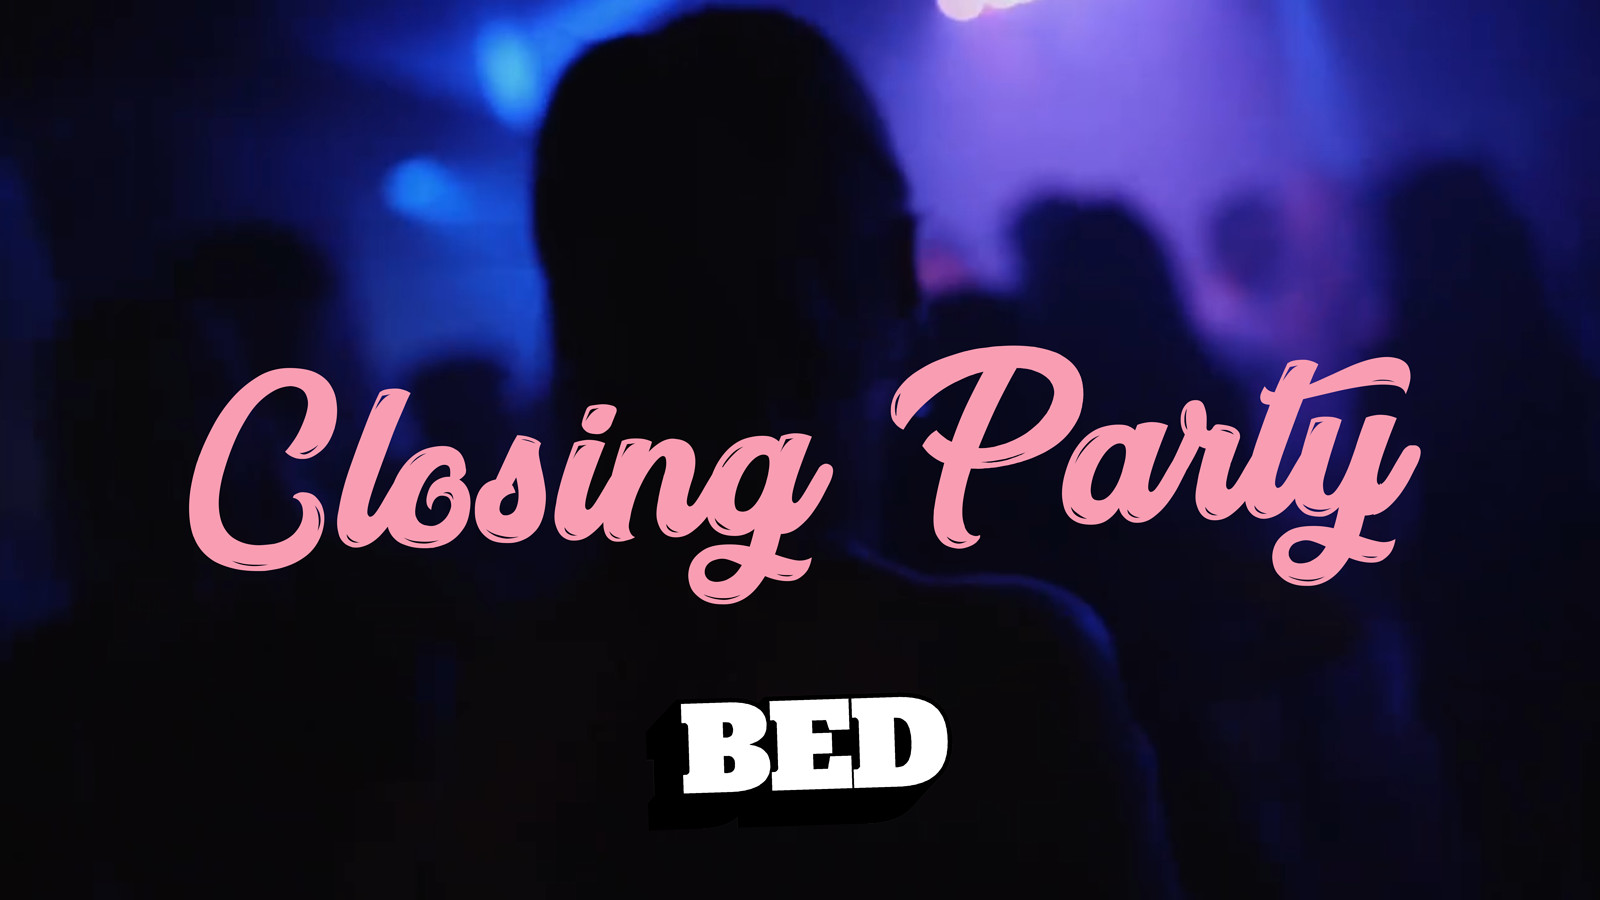 BED Bristol: Closing Party at Gravity Nightclub